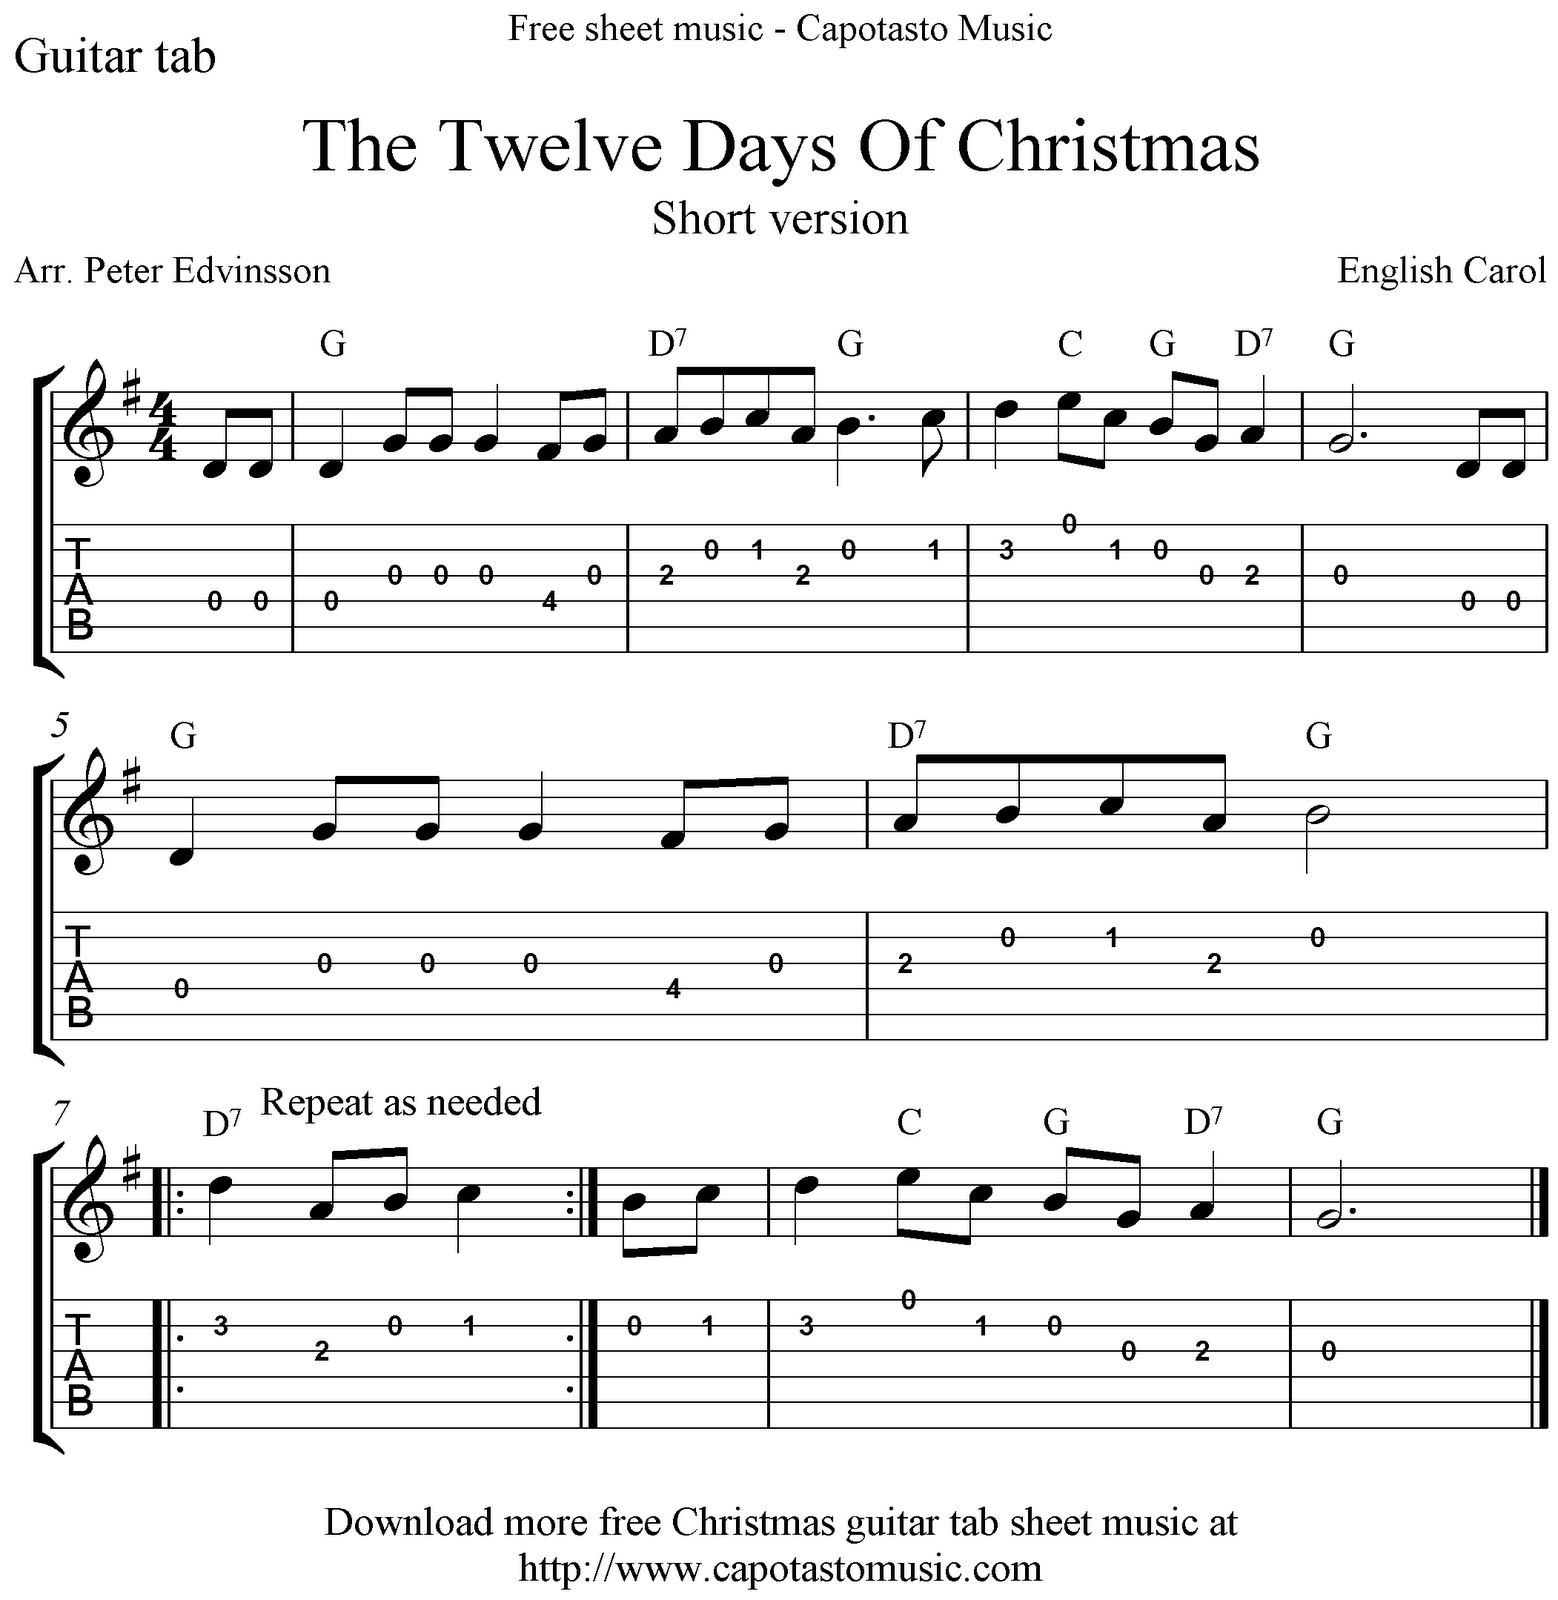 The Twelve Days Of Christmas Free Guitar Tablature Sheet Music